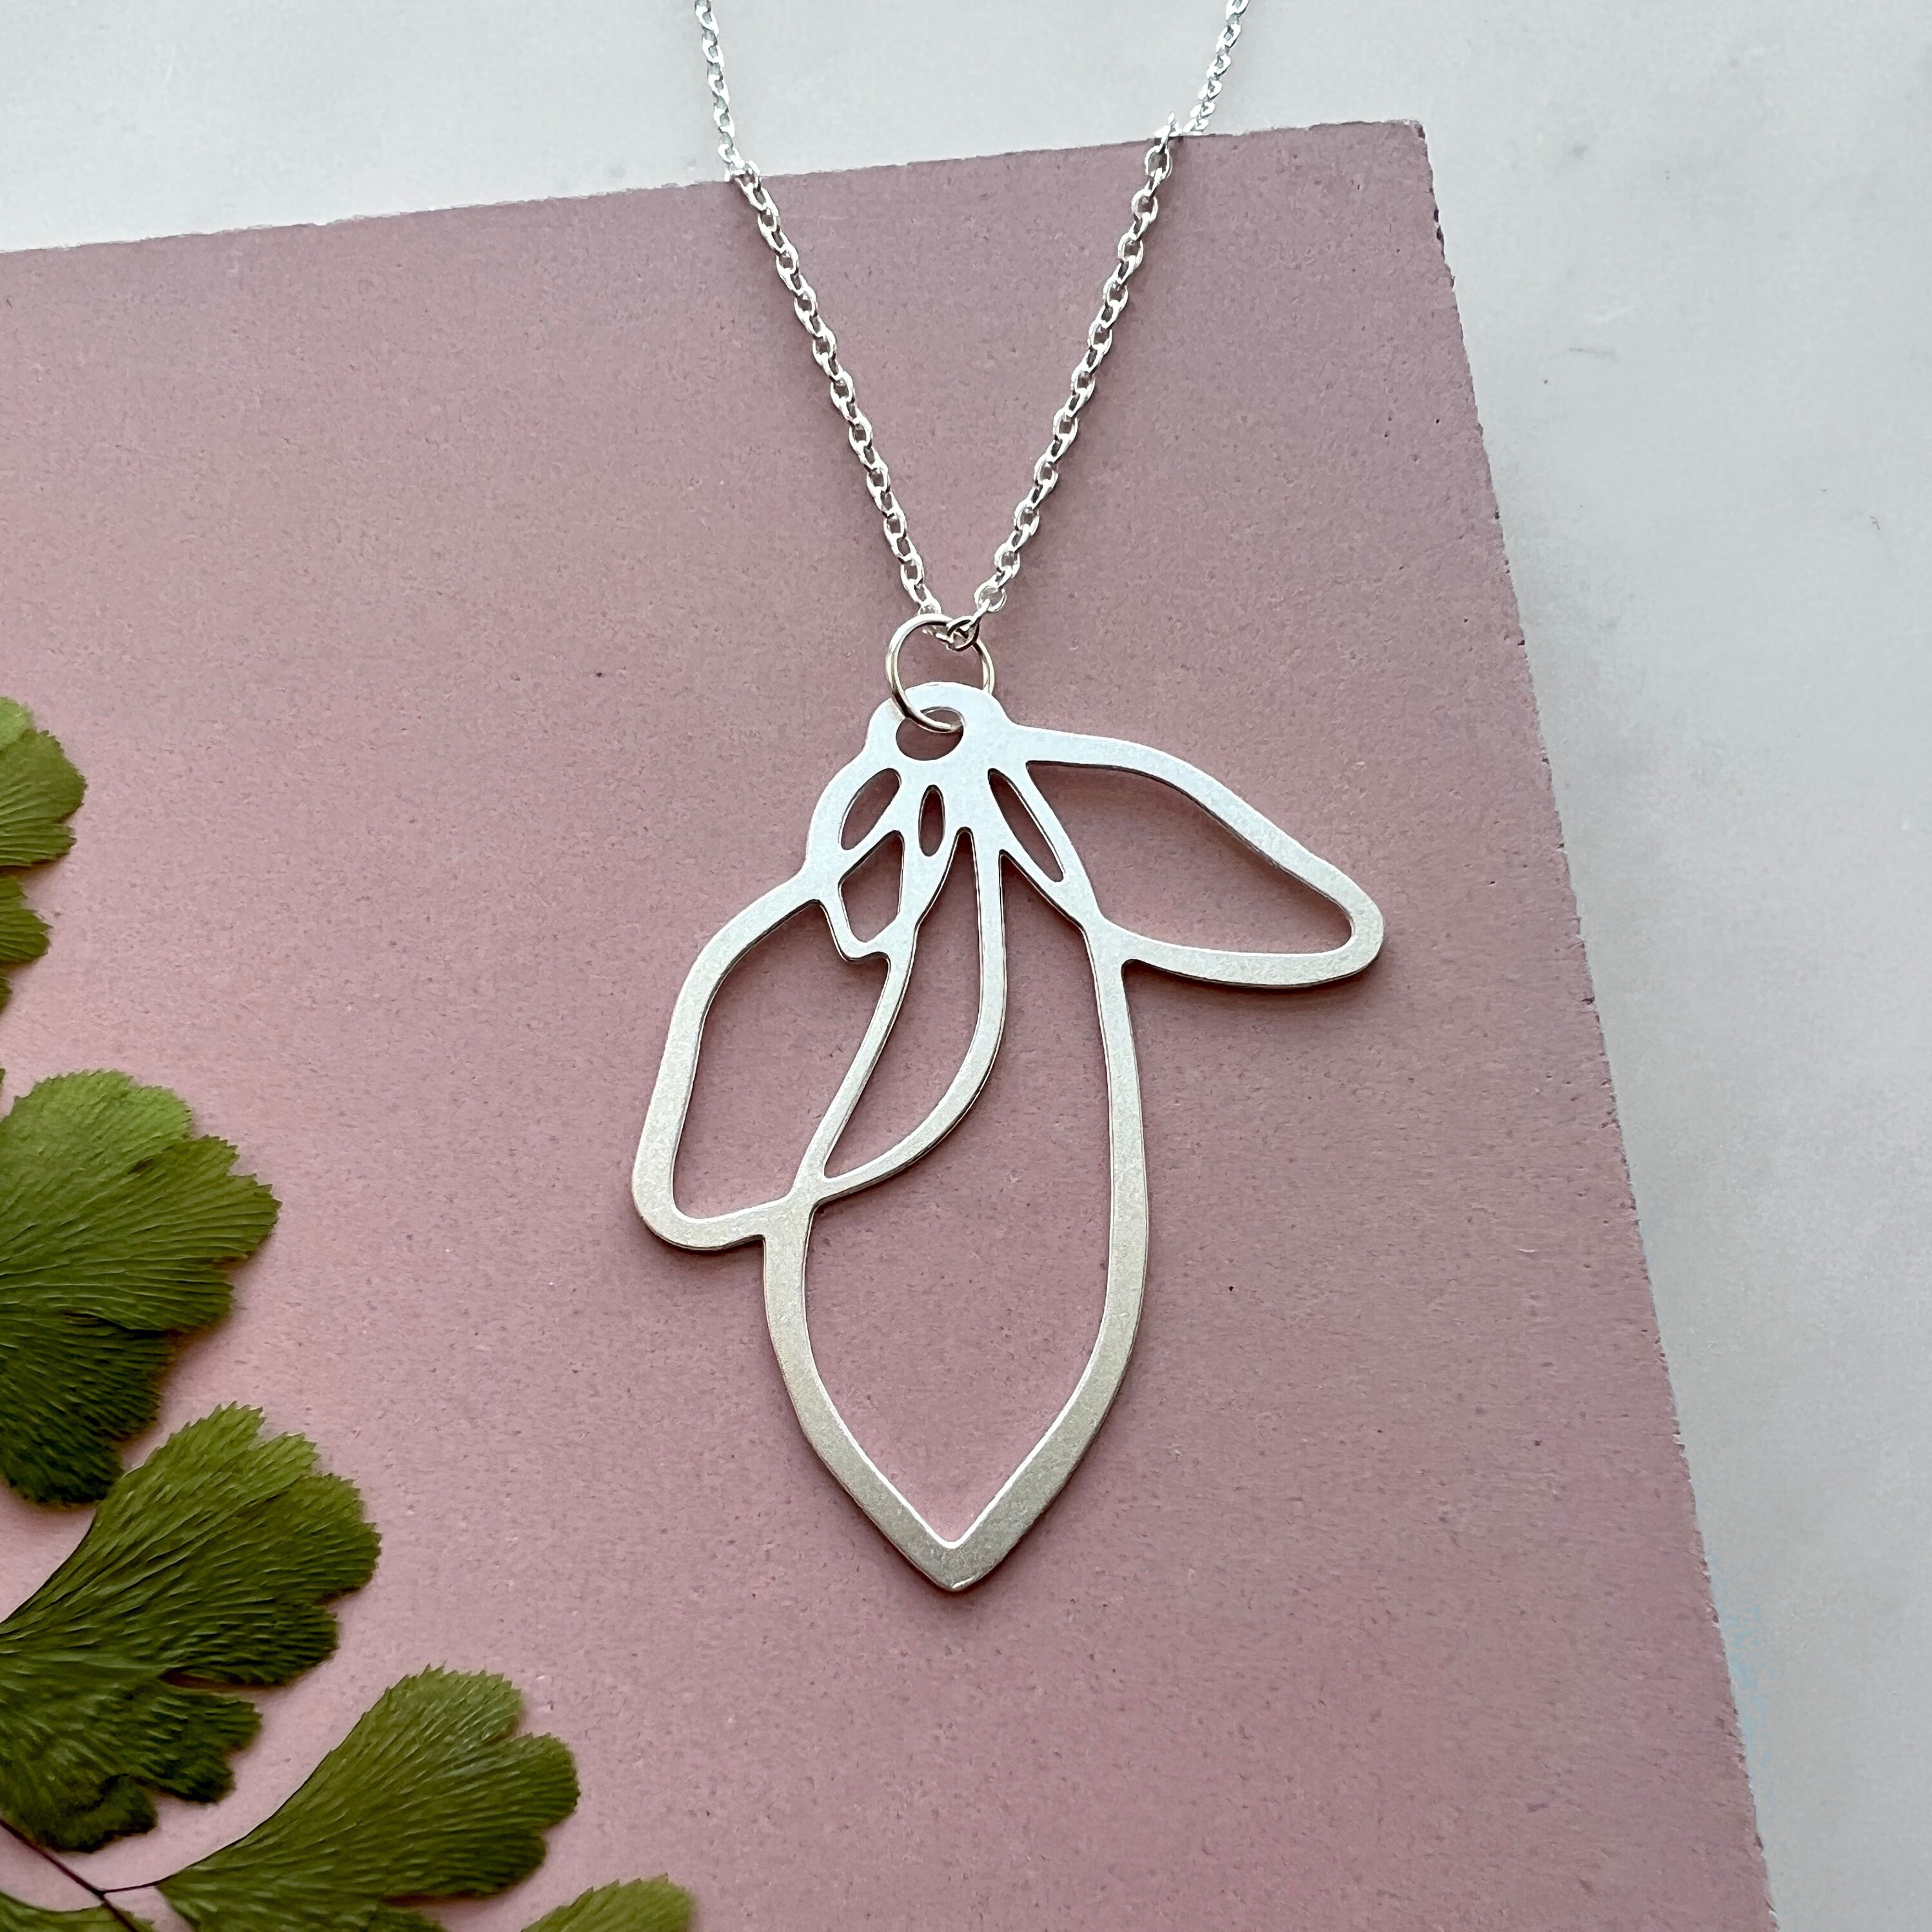 Silver Petal Necklace - Simple Flower Pendant Modern Jewellery Botanical